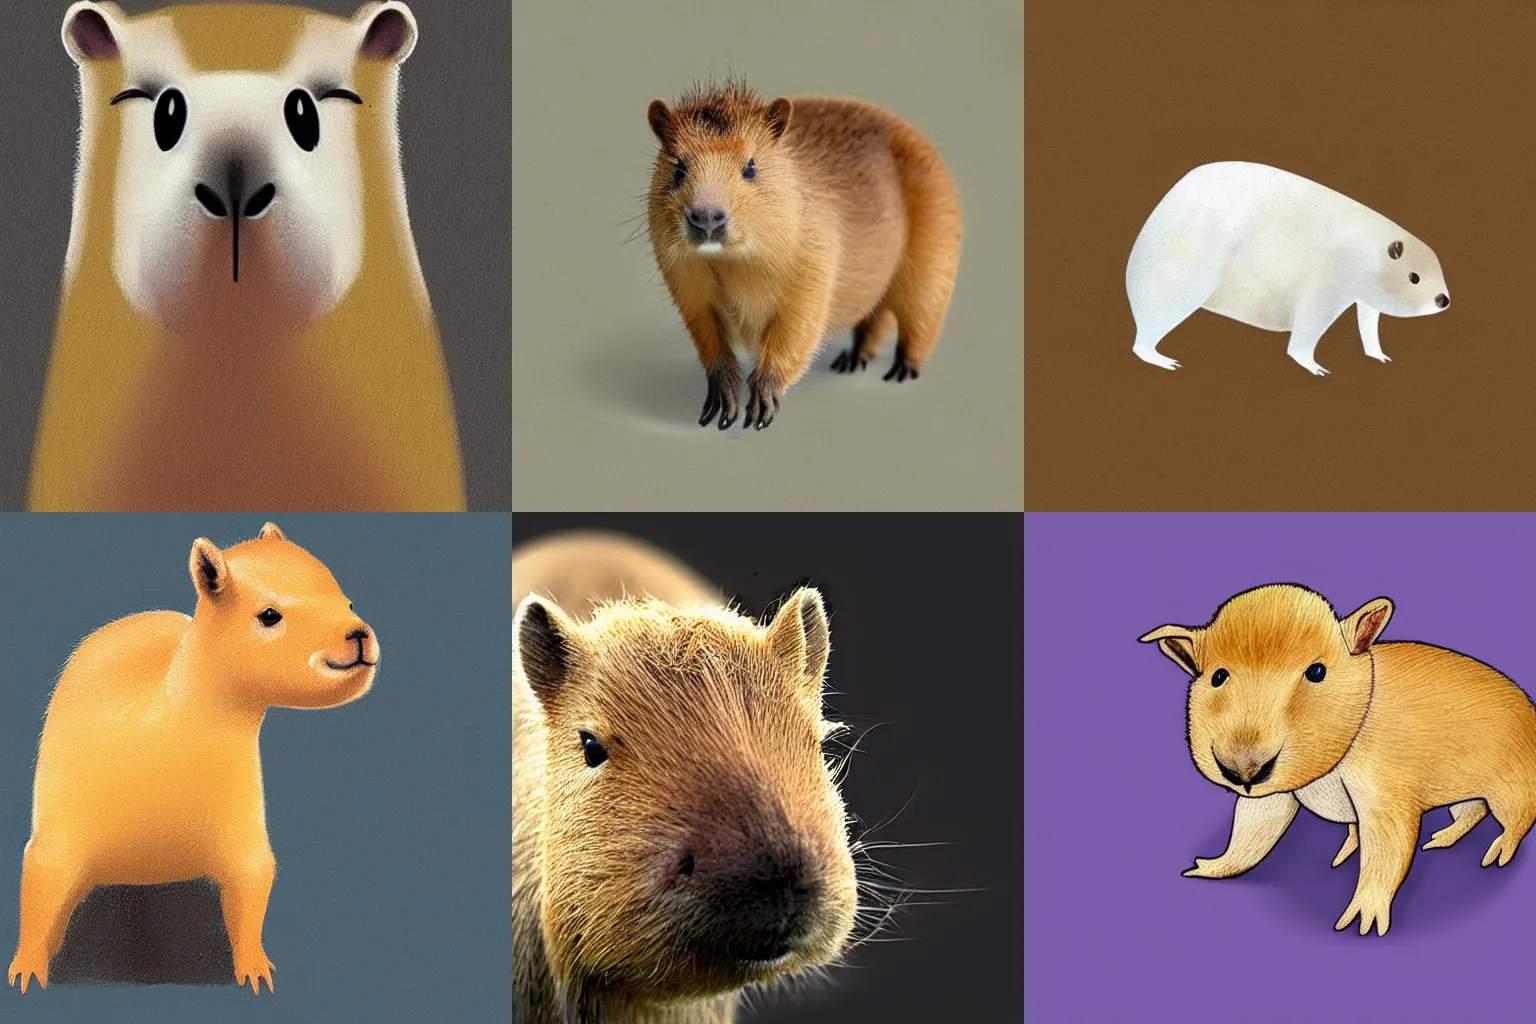 Prompt: miniature capybara, digital art, simple, cute, white background